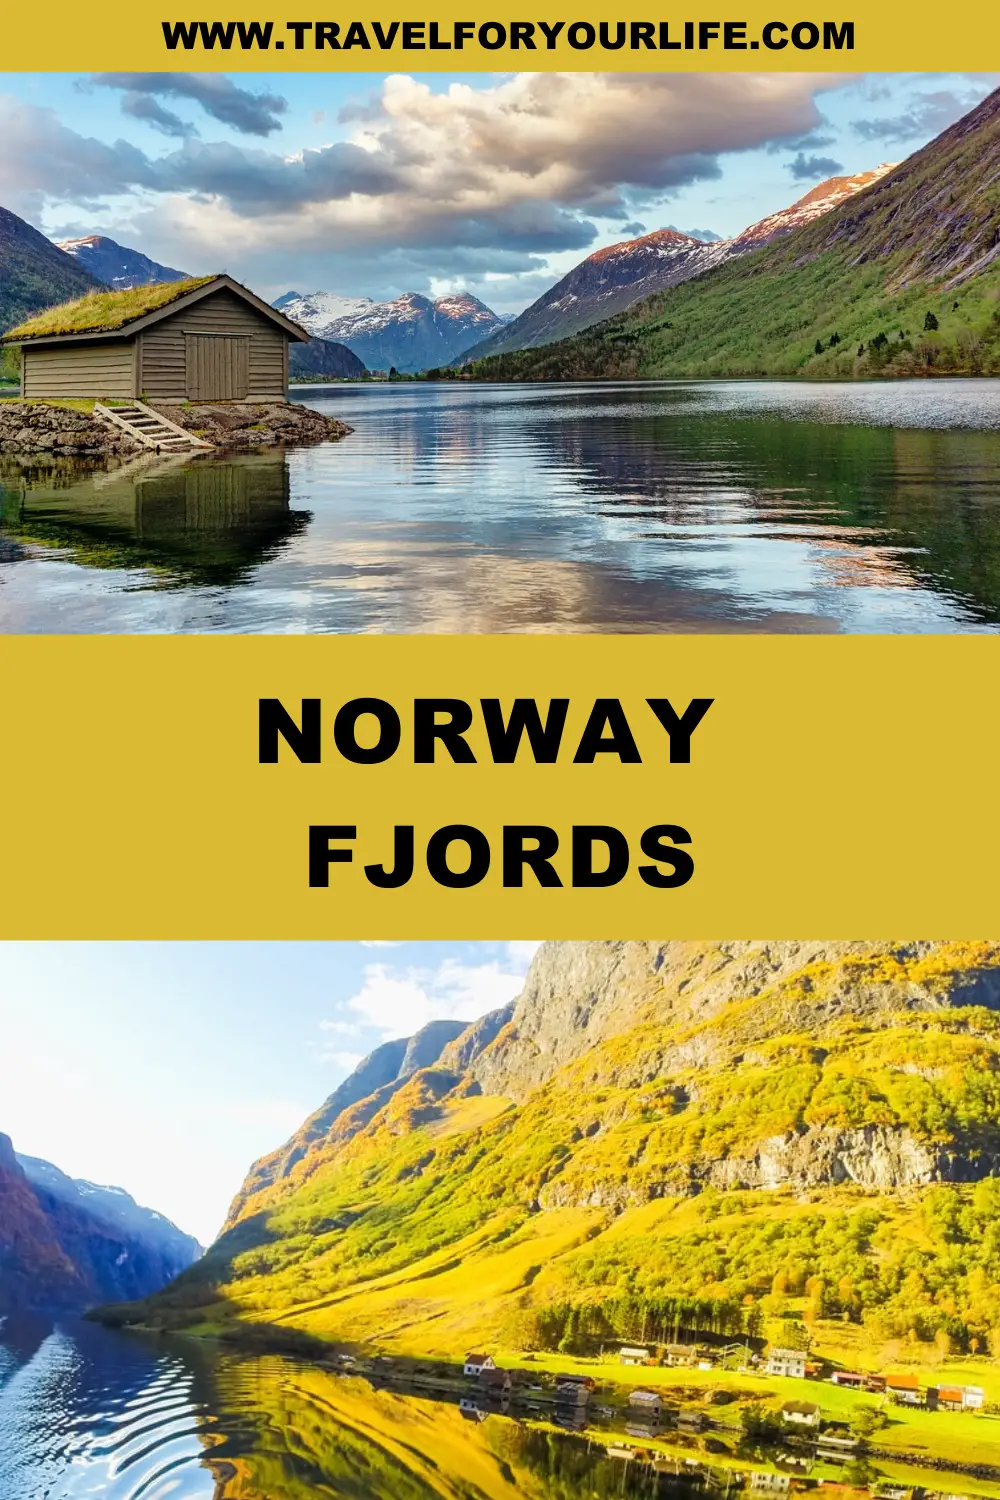 Norway fjords 